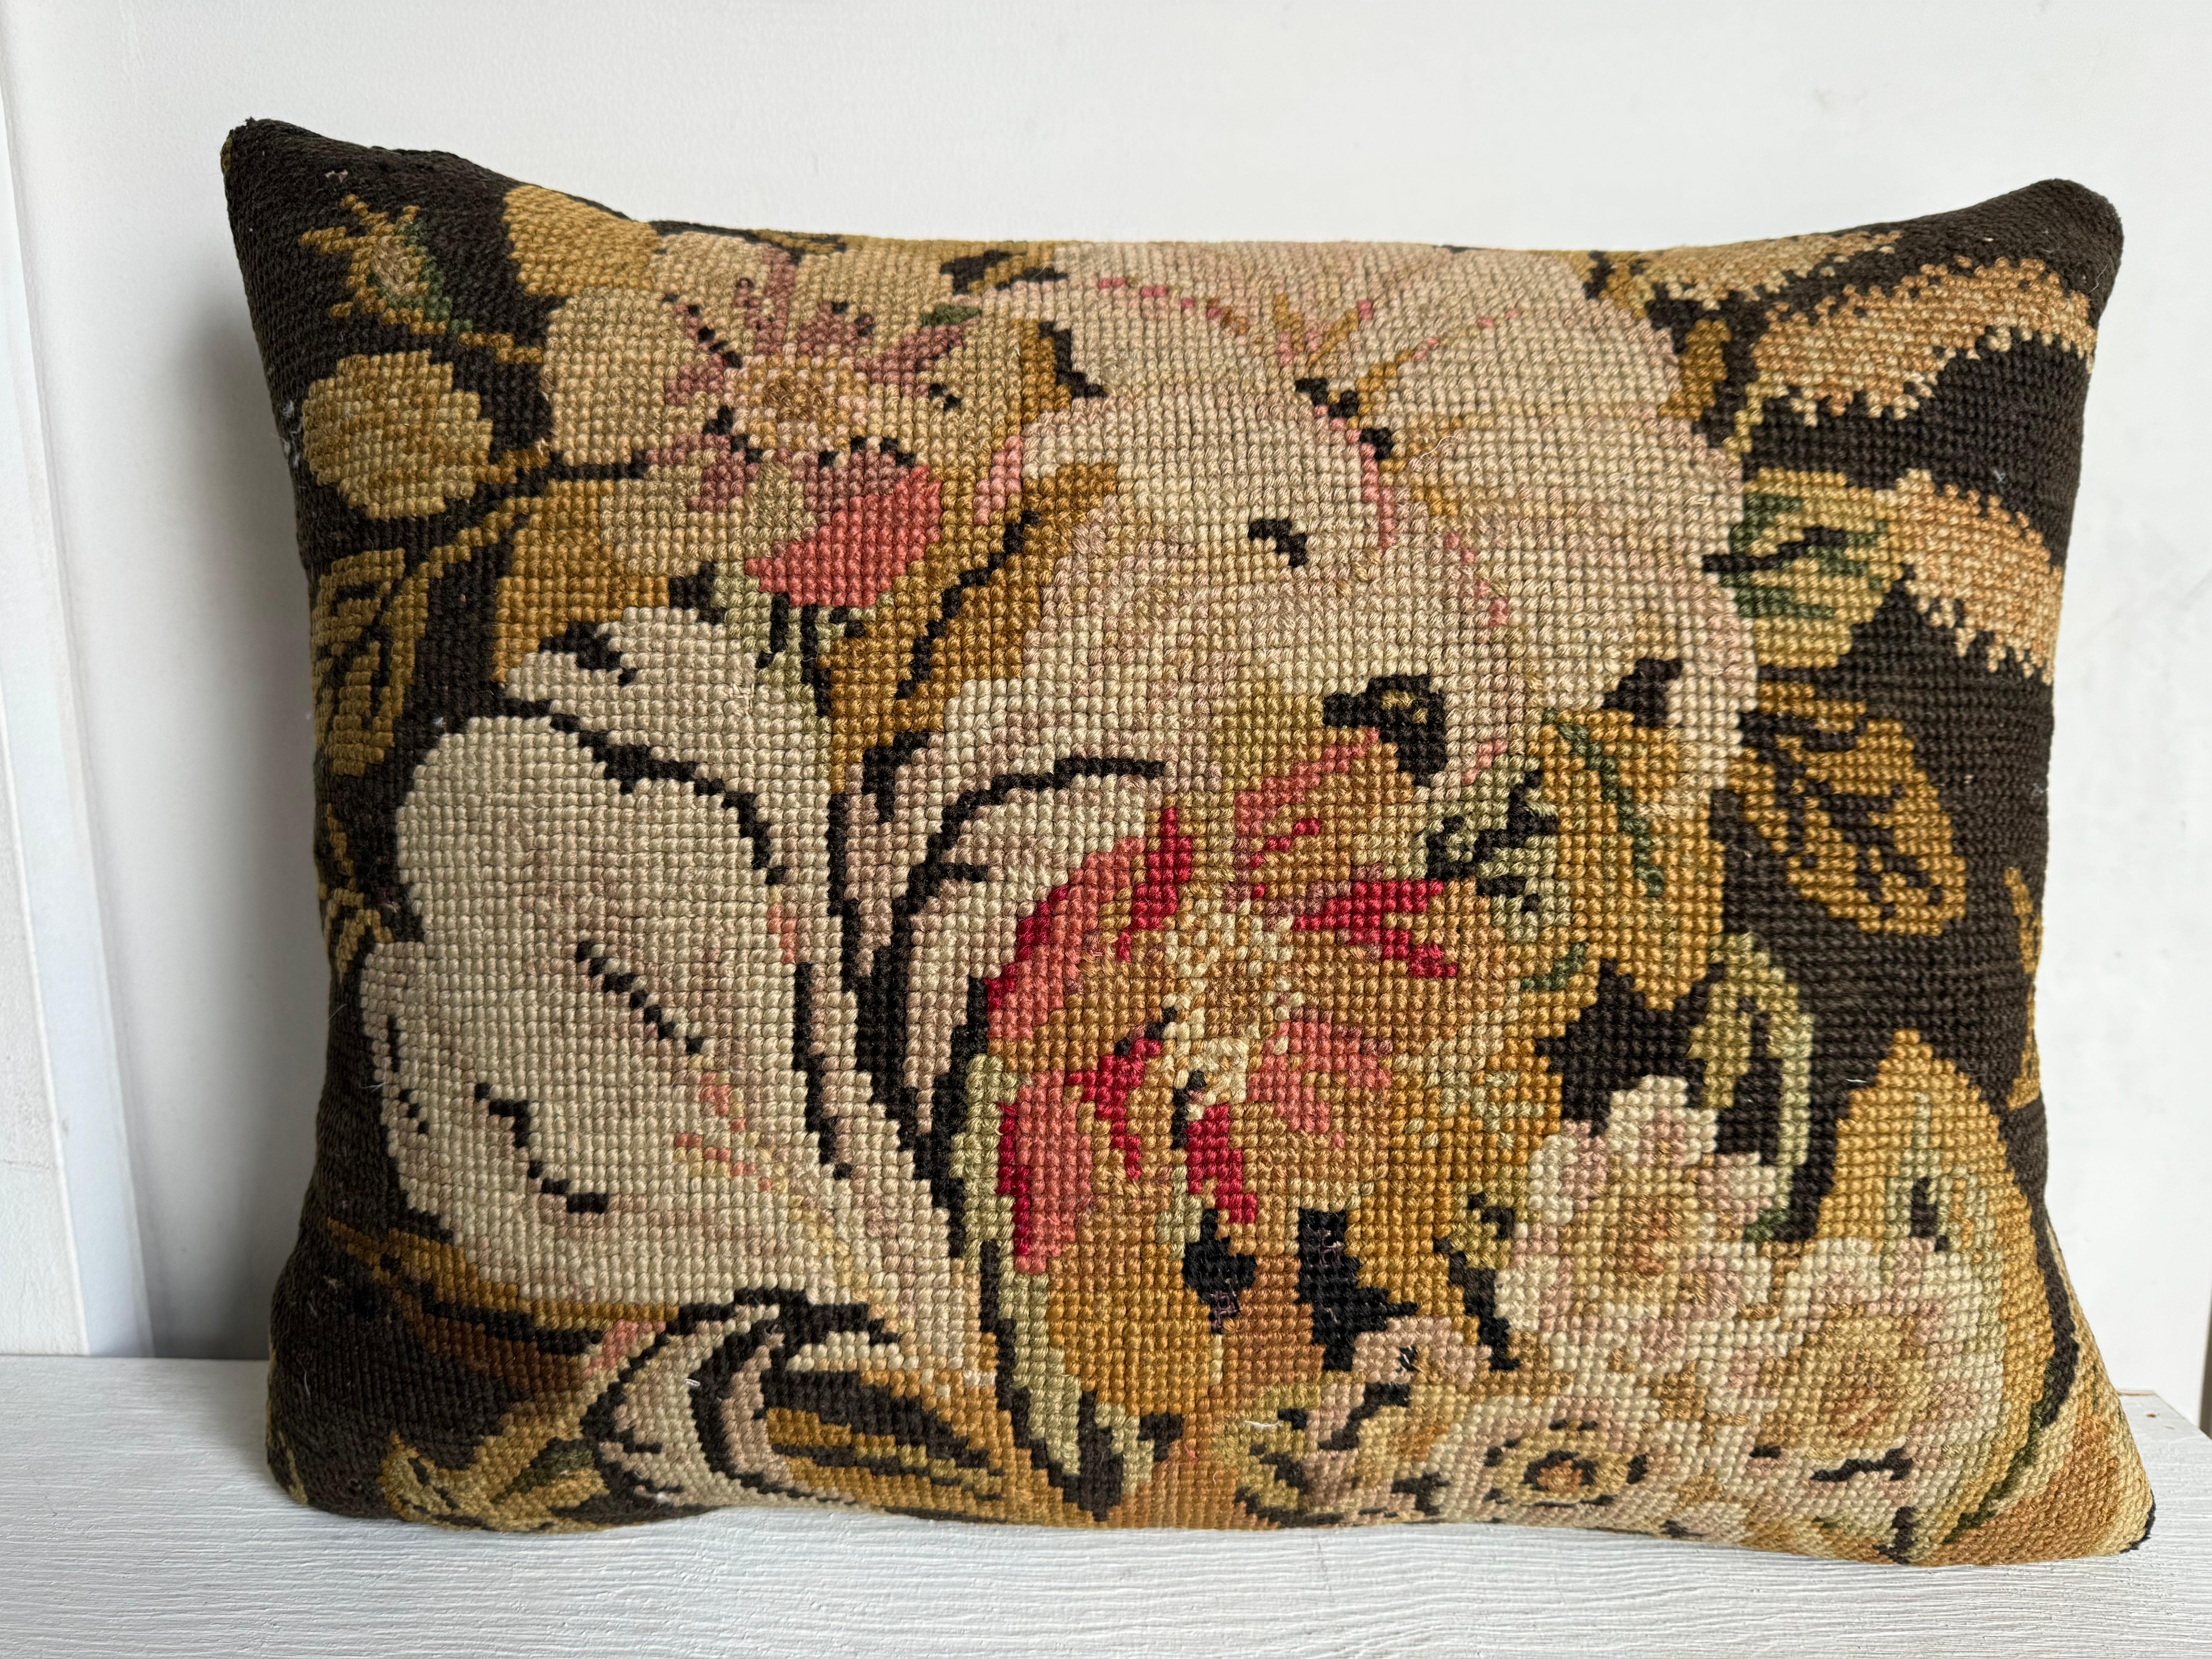 English Needlework Pillow 1850 - 21